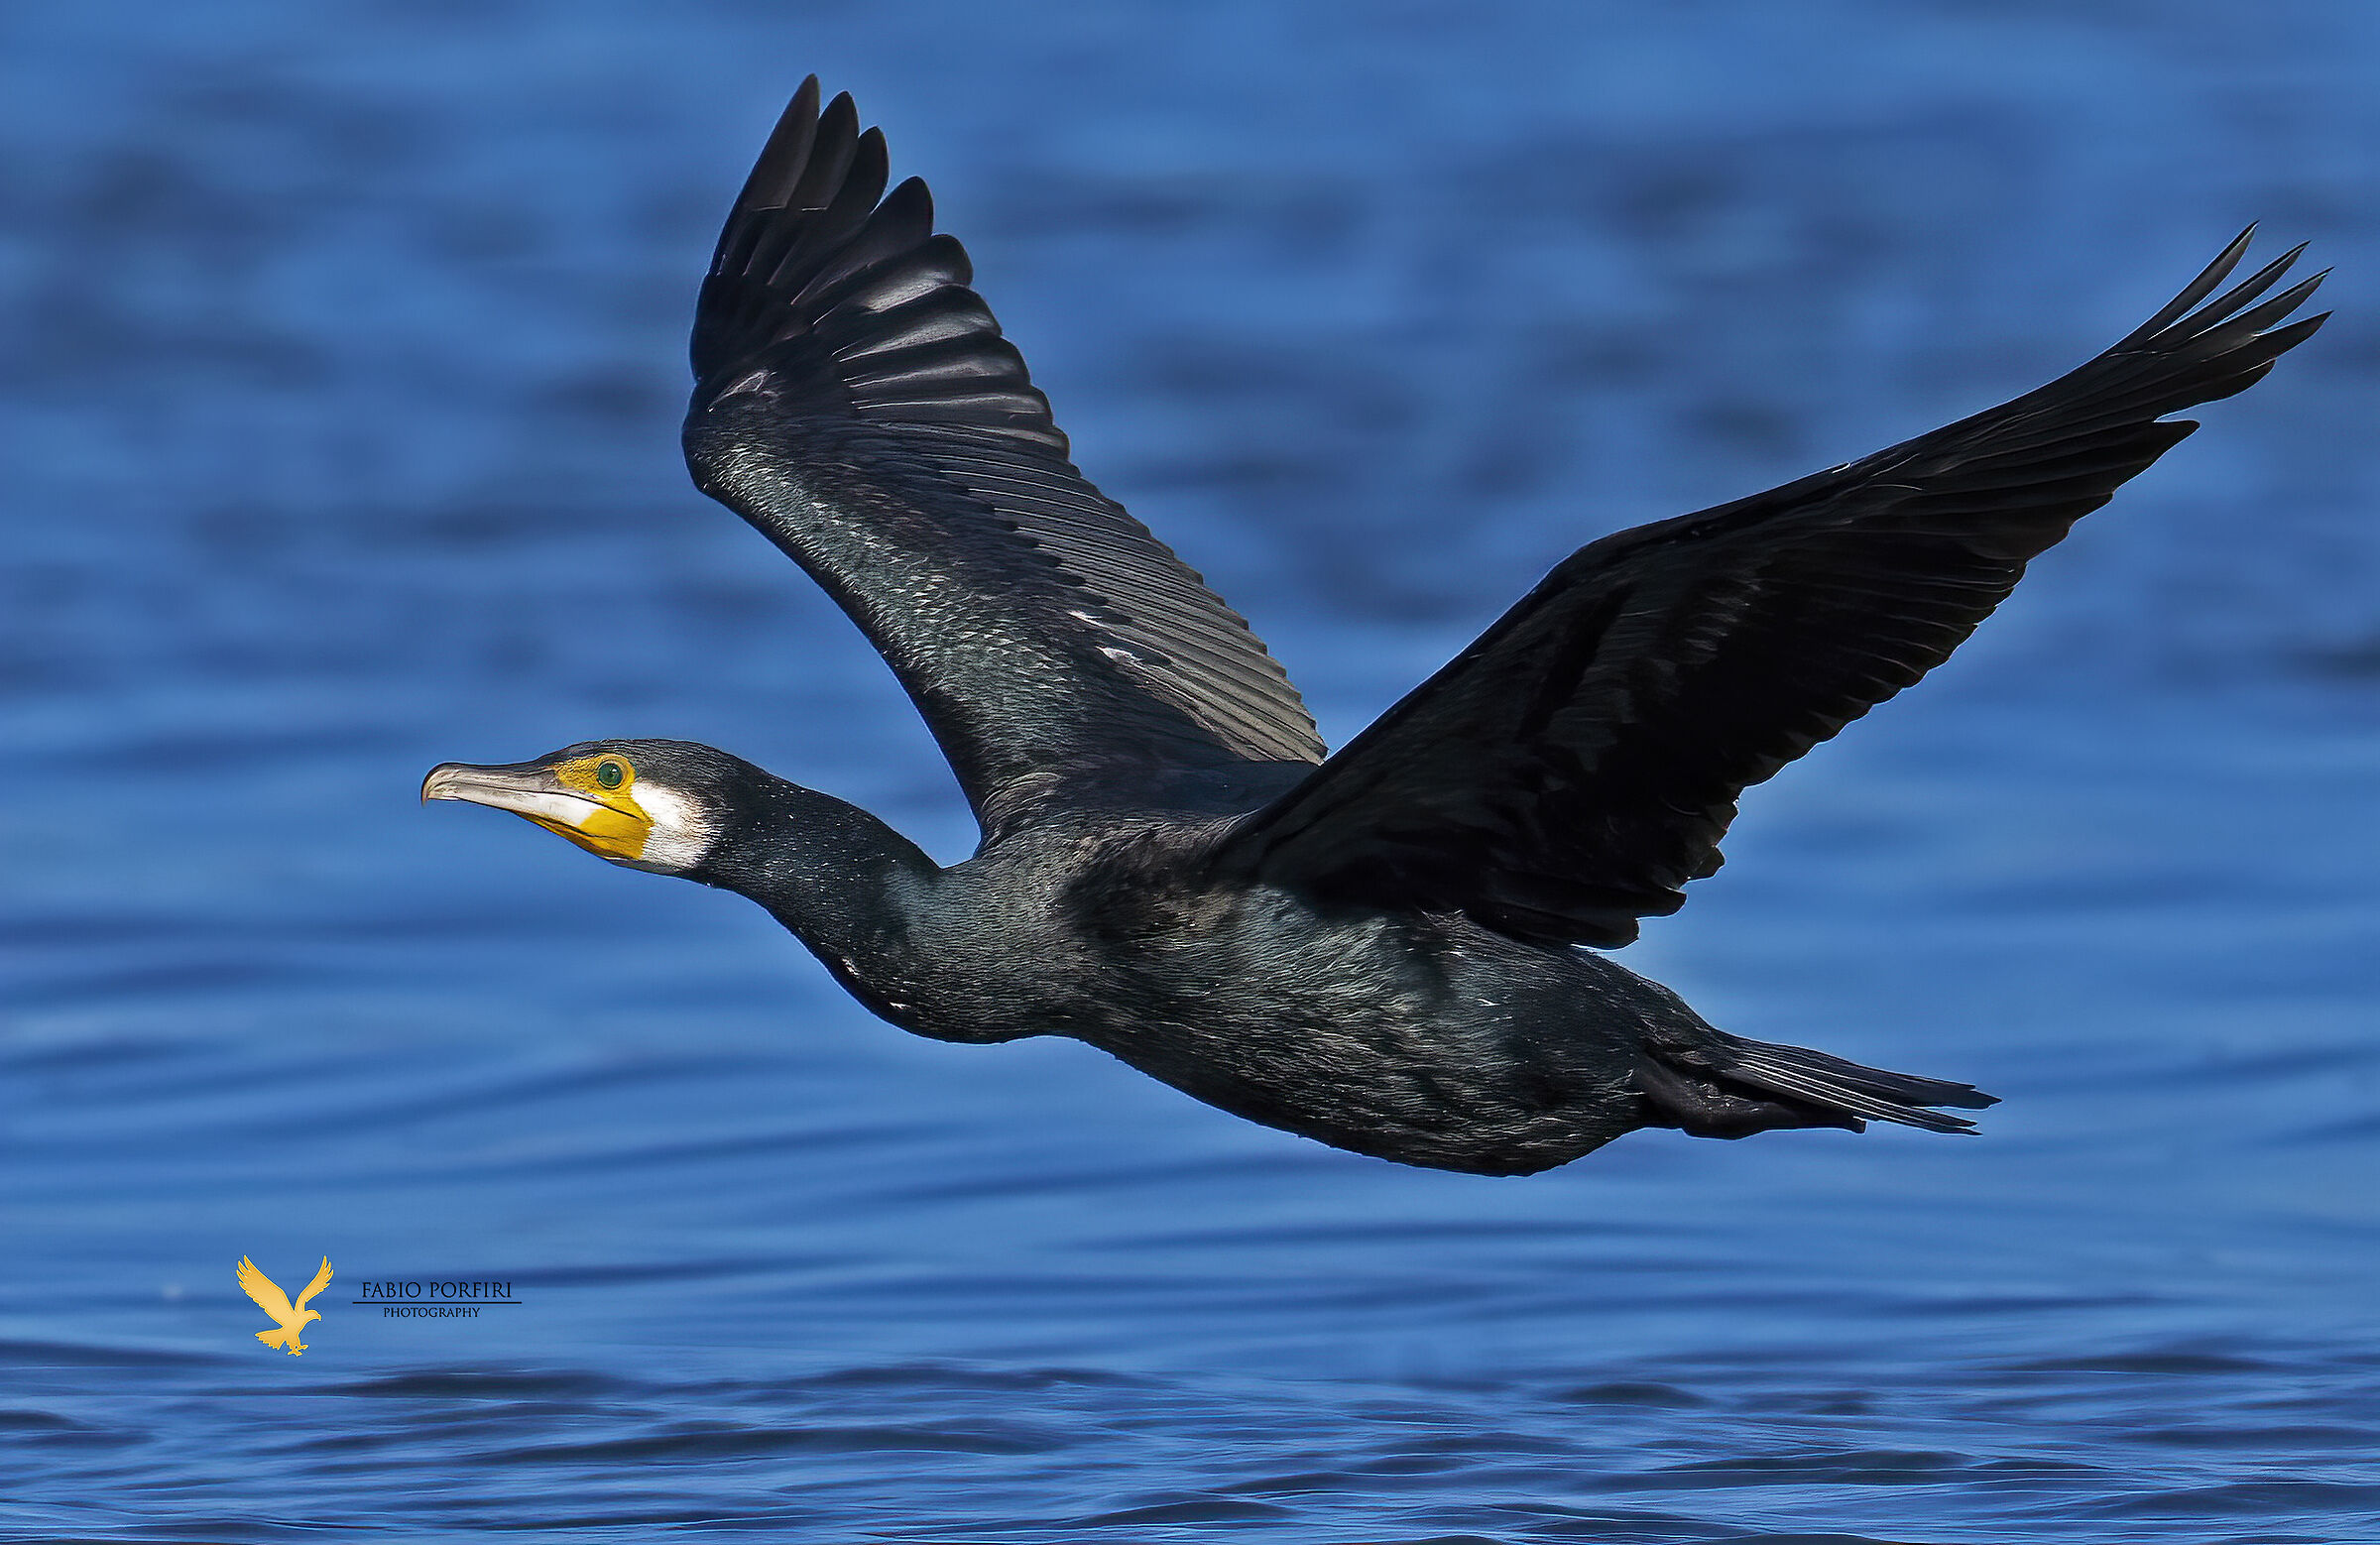 The iridescences of the cormorant...